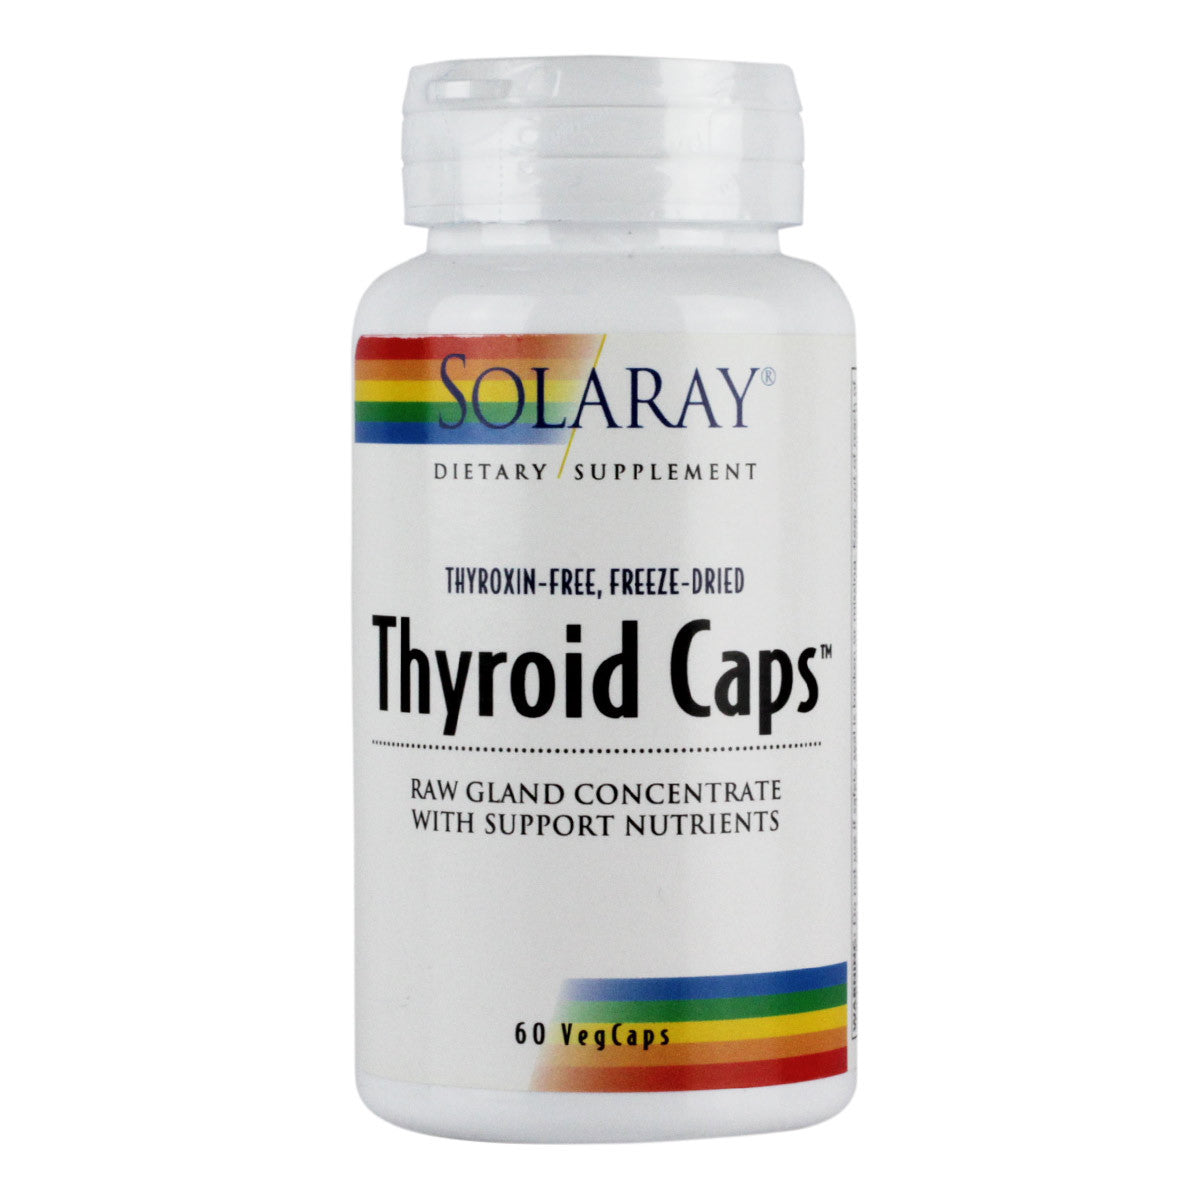 Primary image of Thyroid Caps